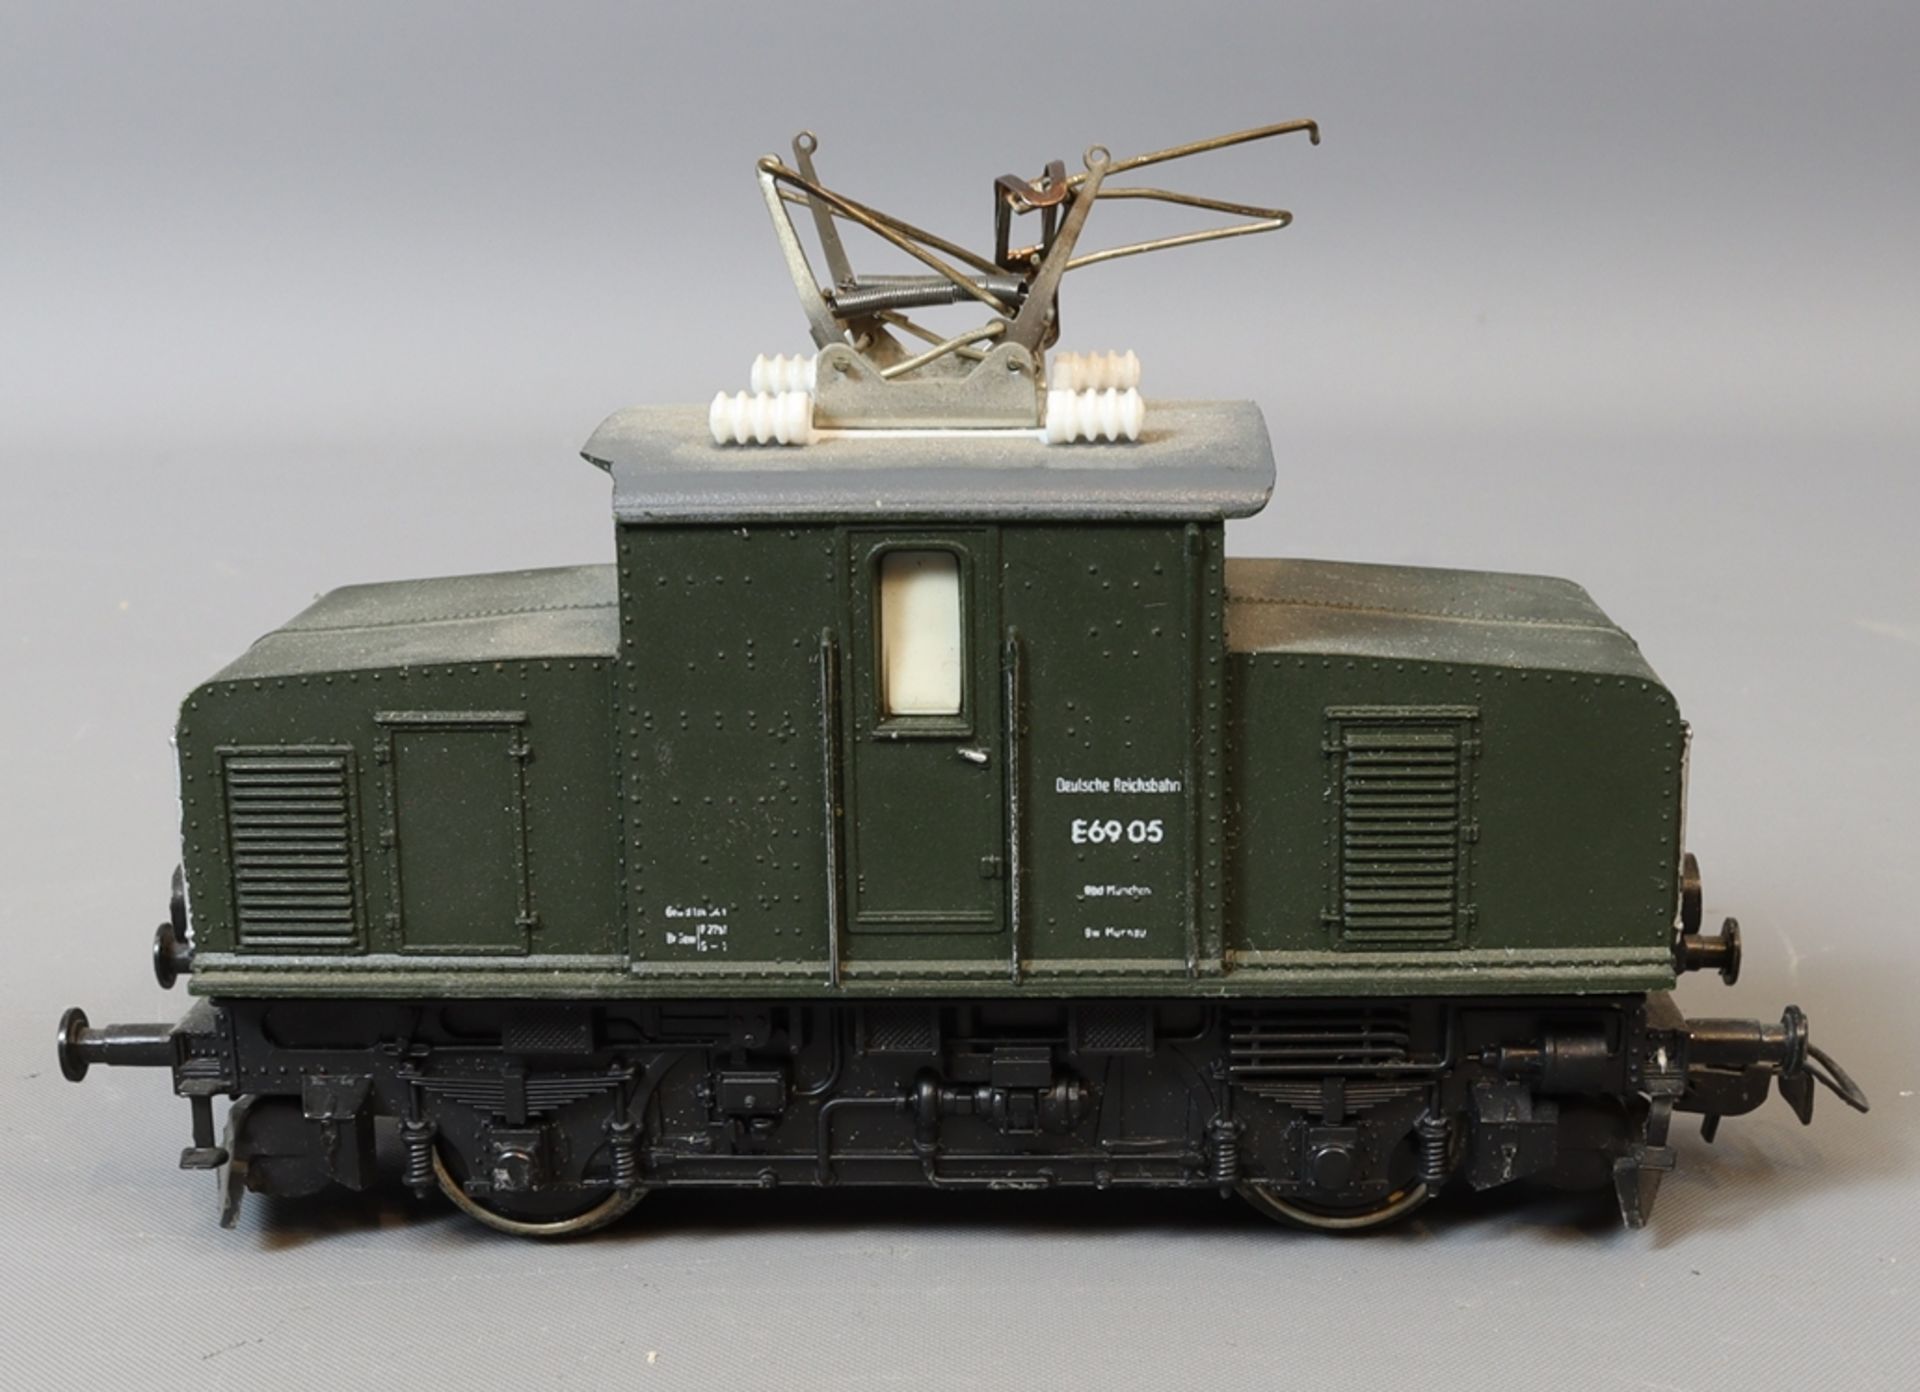 E-locomotive E 6905 Piko, German Reichsbahn, second half of the 20th century - Image 2 of 2